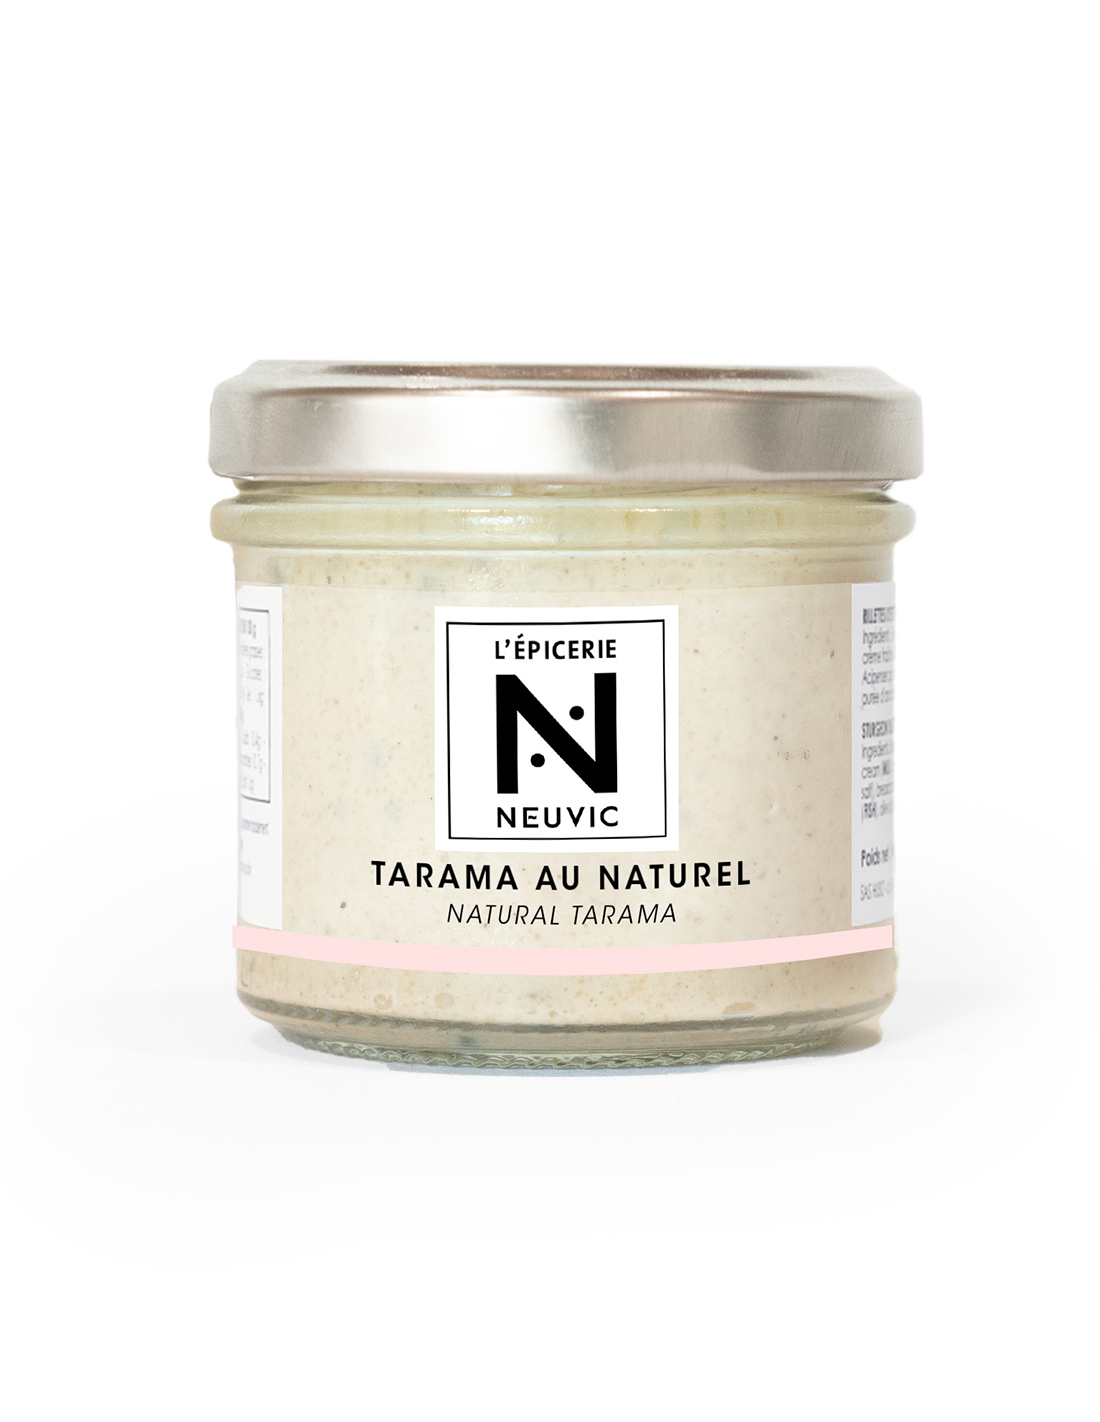 Natural Tarama - Neuvic Epicerie - Caviar de Neuvic